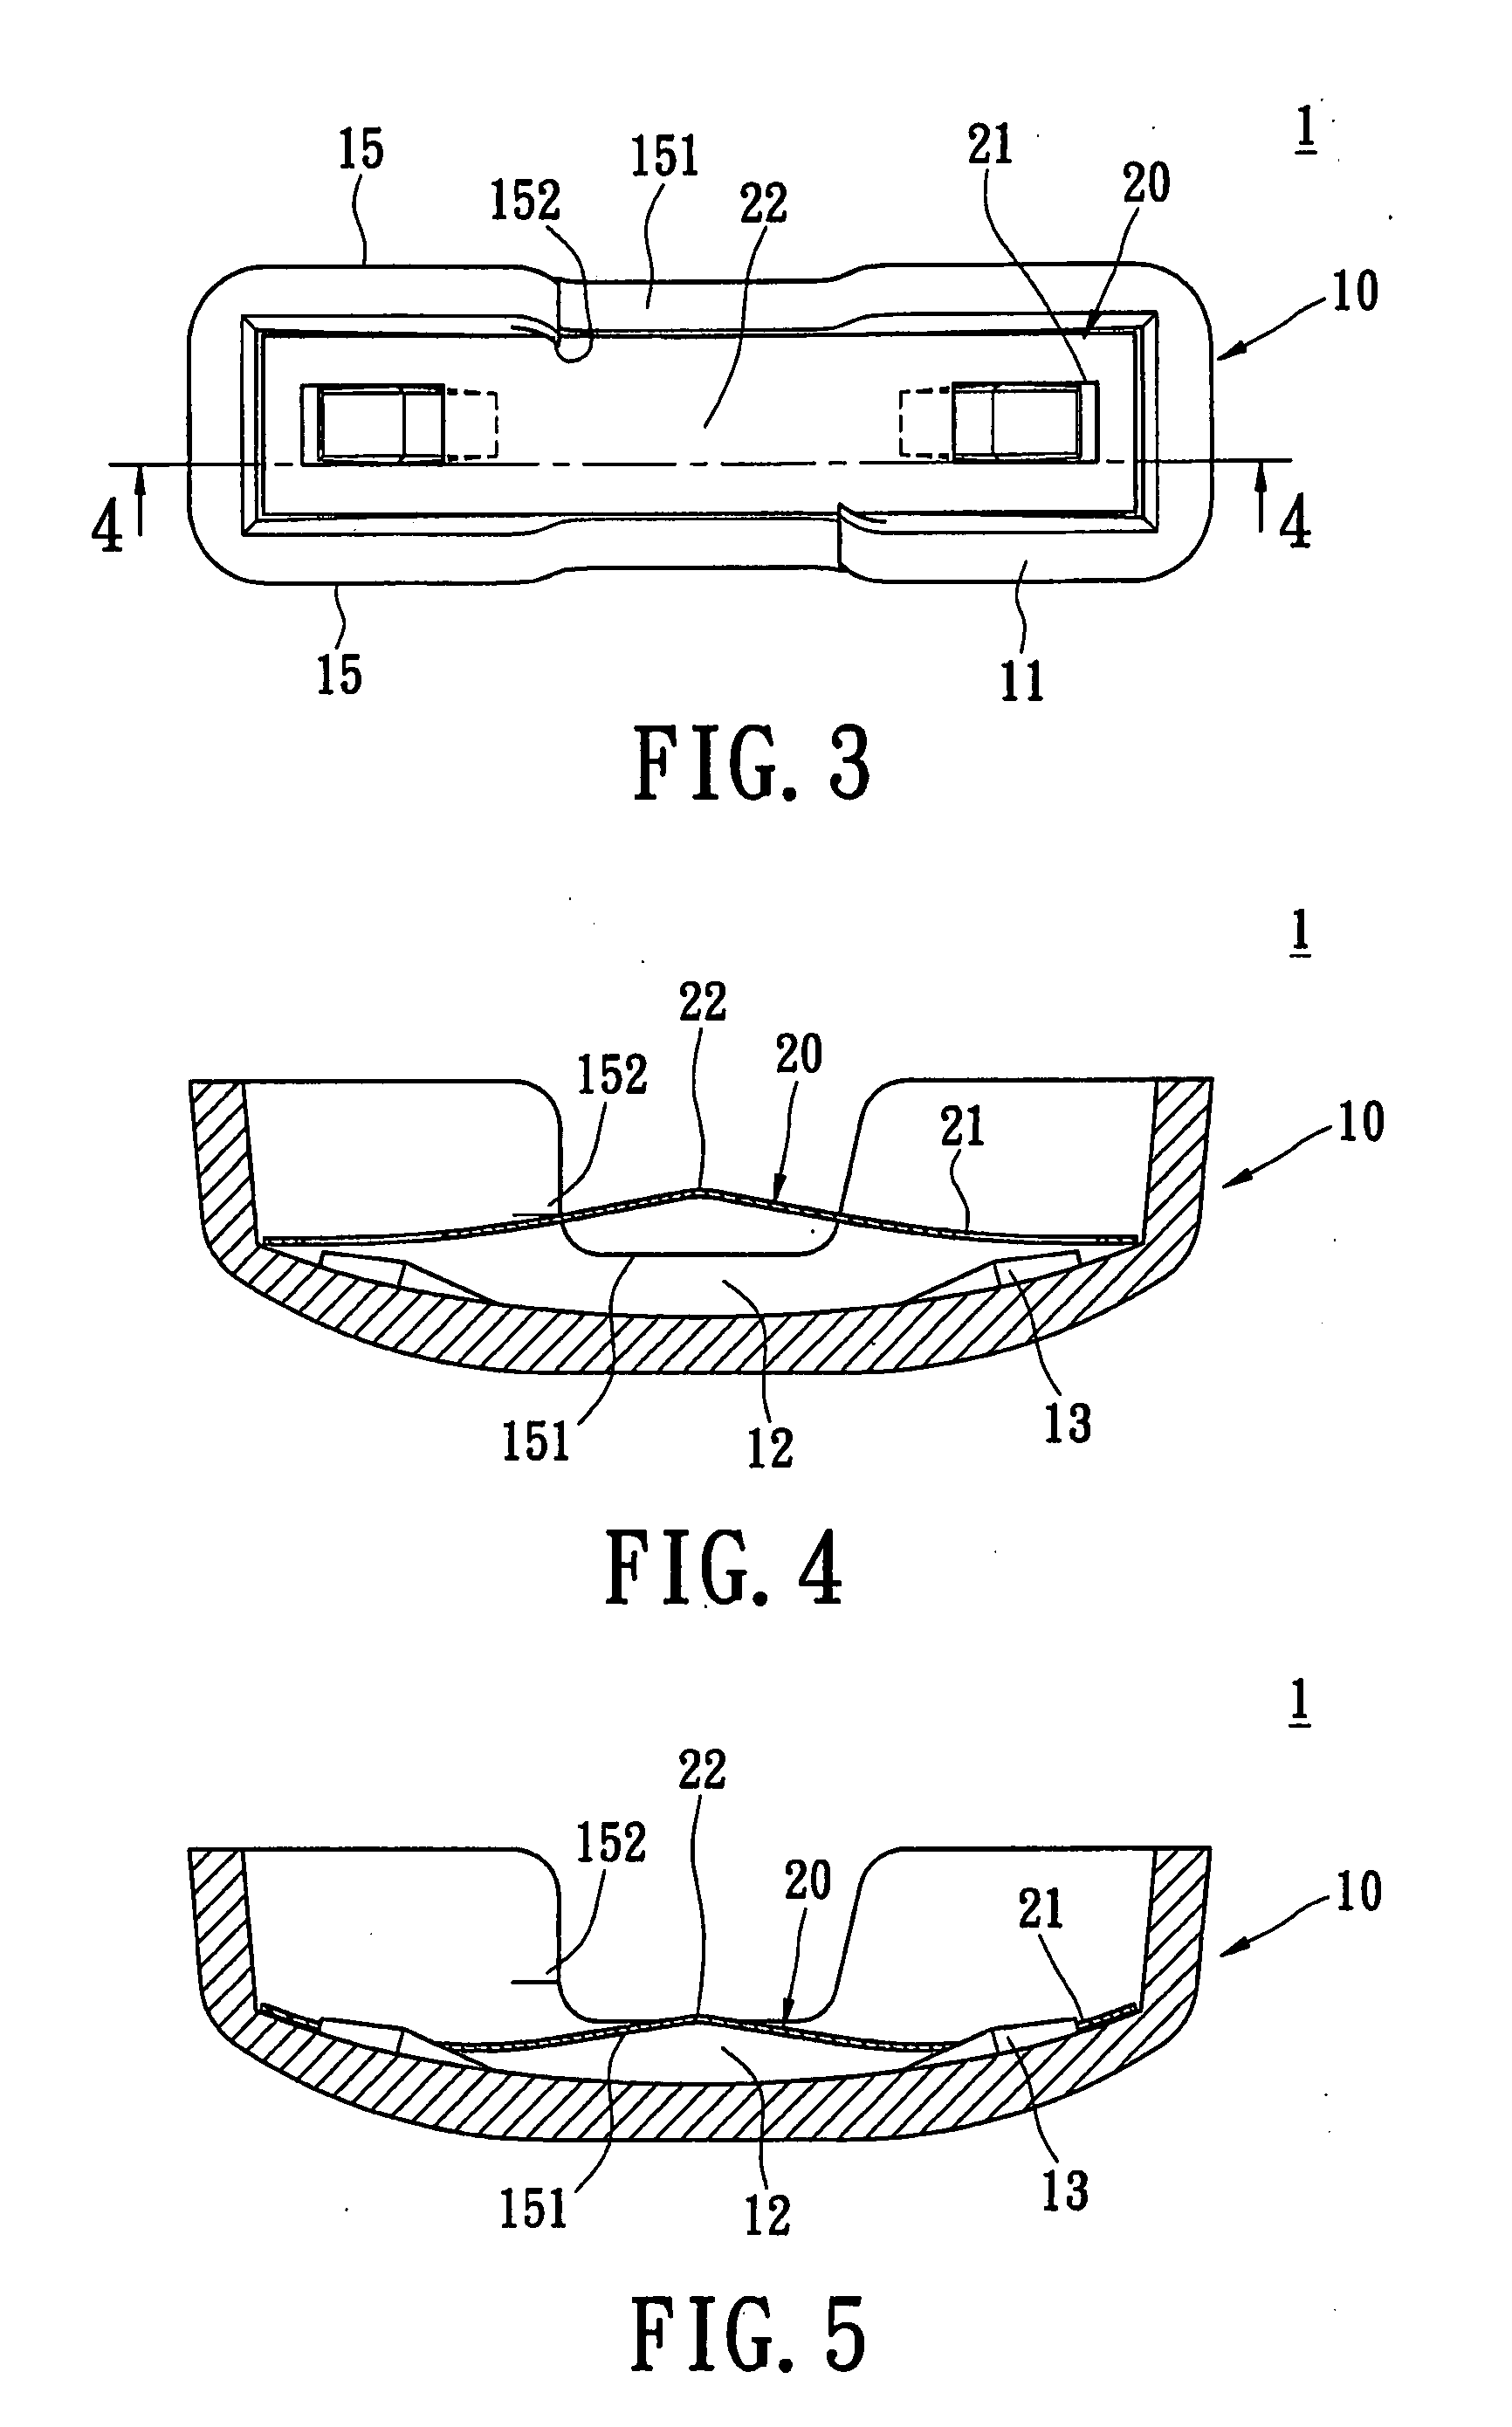 Cap structure for zipper